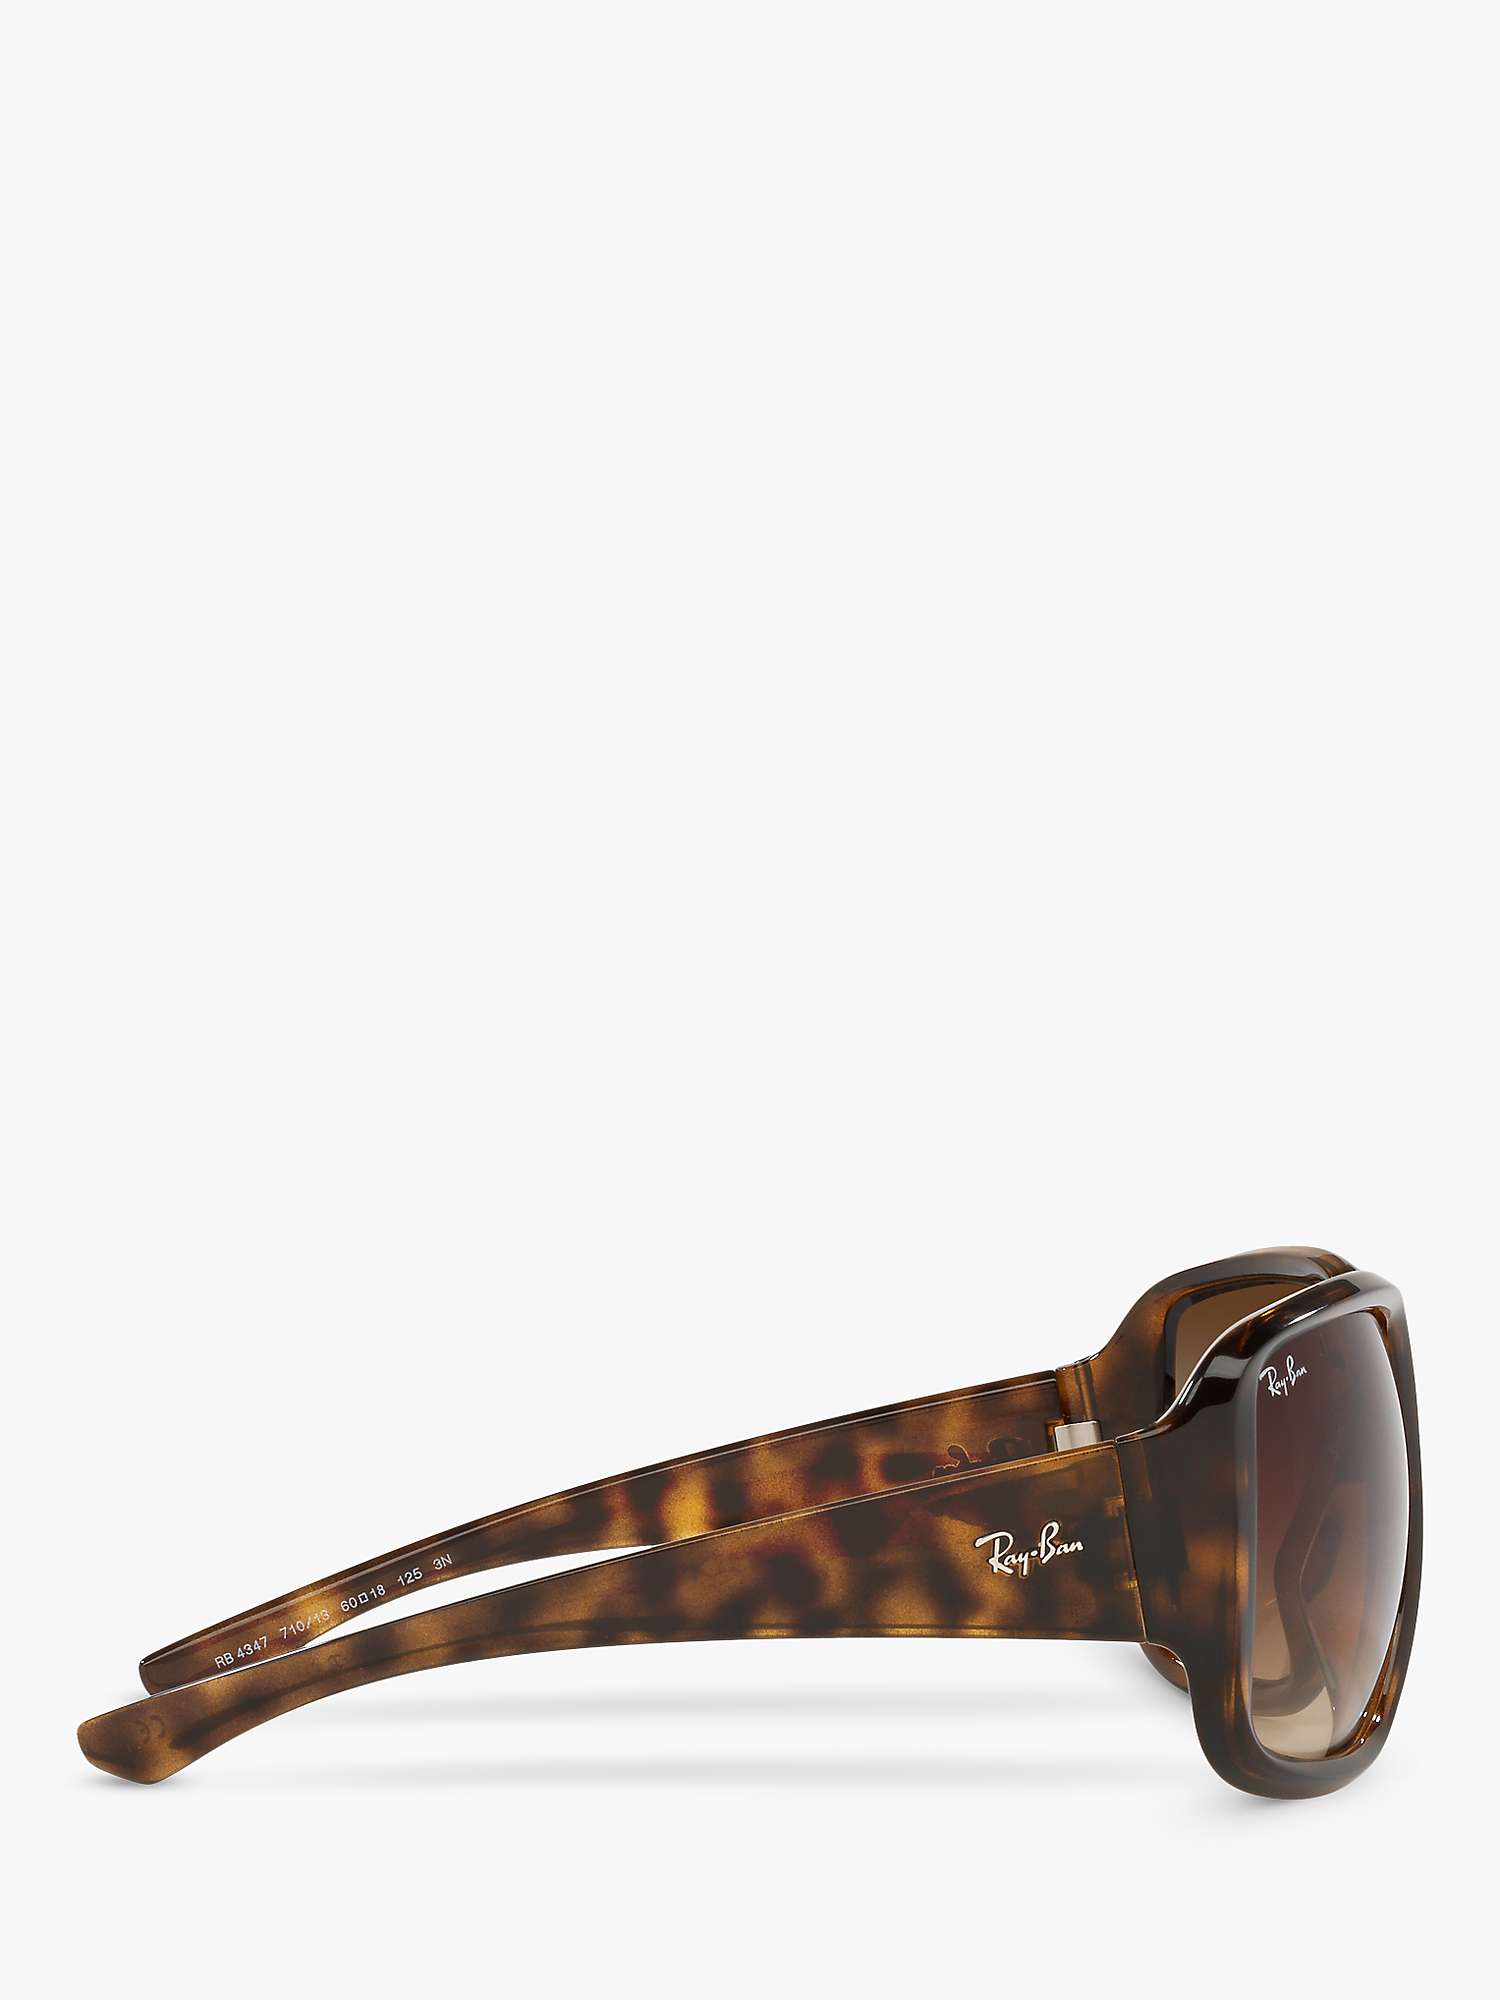 Buy Ray-Ban RB4347 Unisex Tortoiseshell Square Sunglasses, Havana/Brown Gradient Online at johnlewis.com